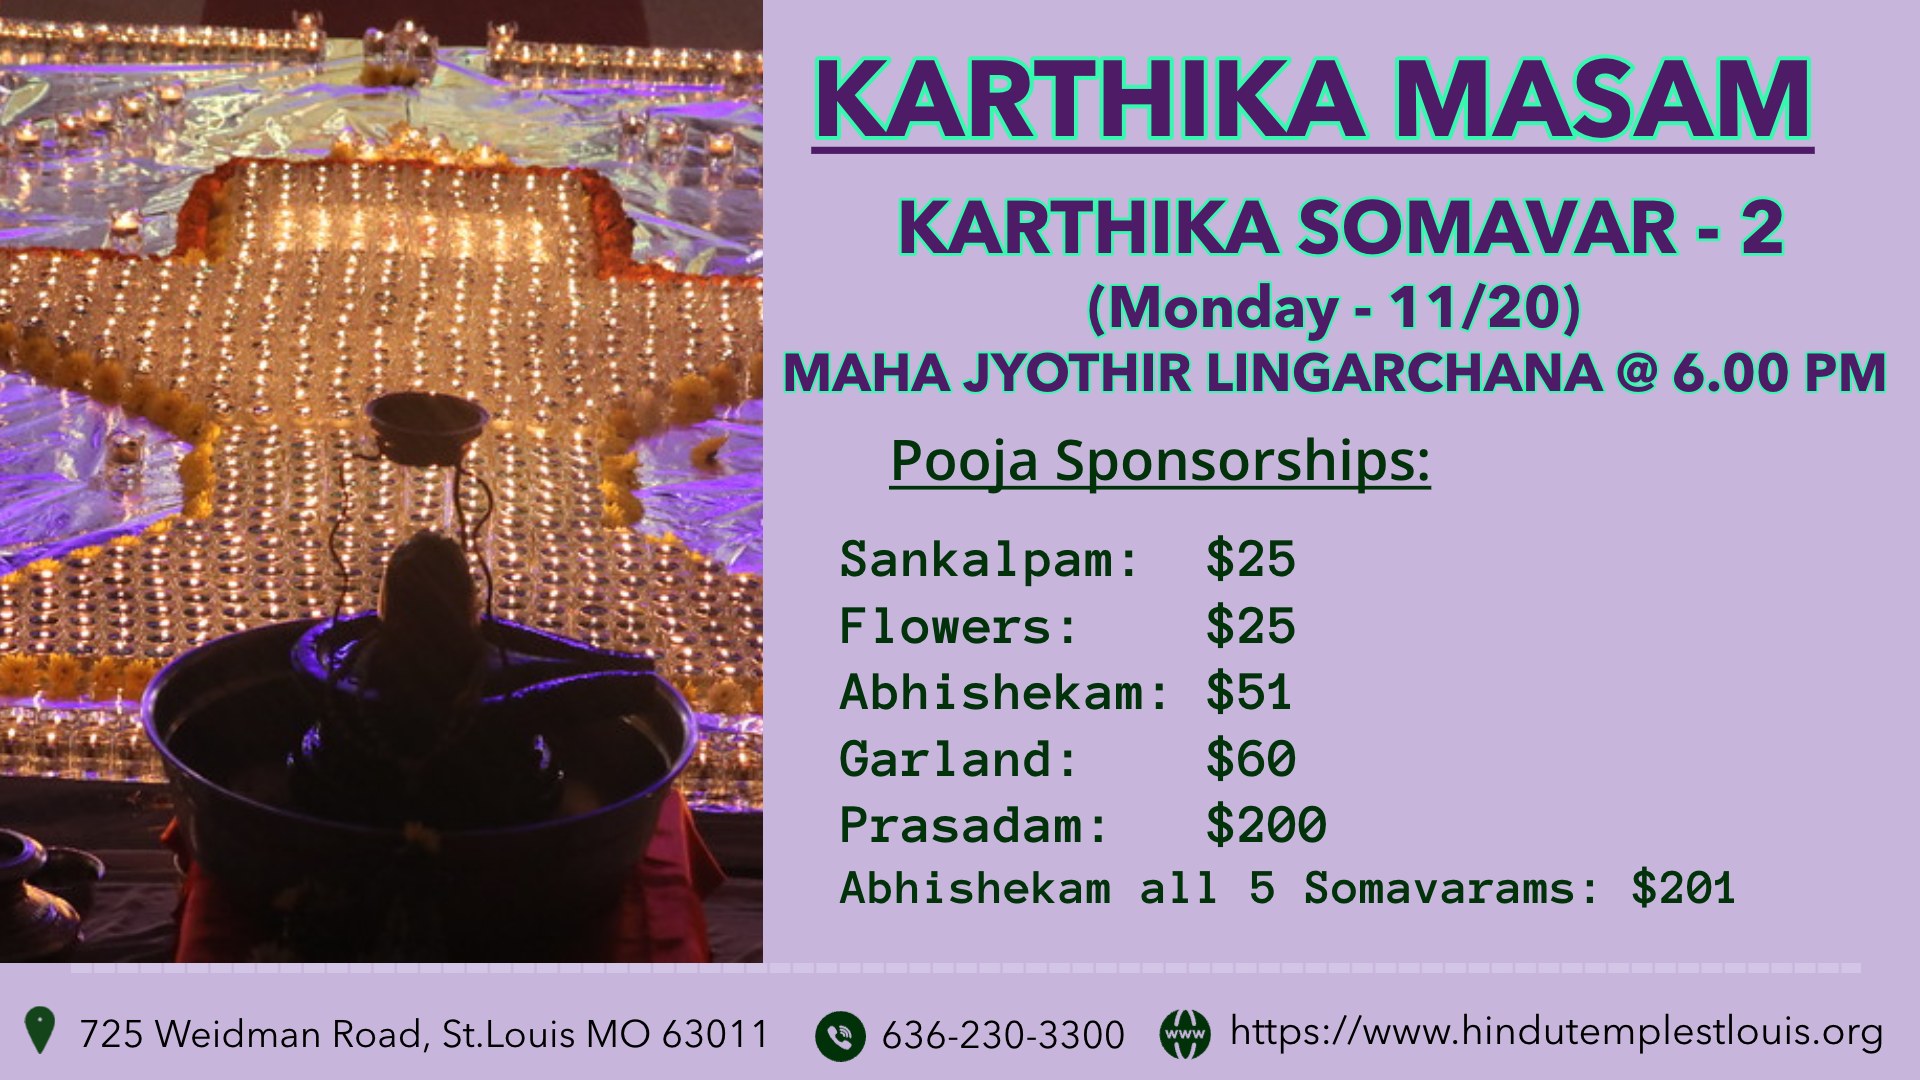 Karthika Masam - Somavar-2